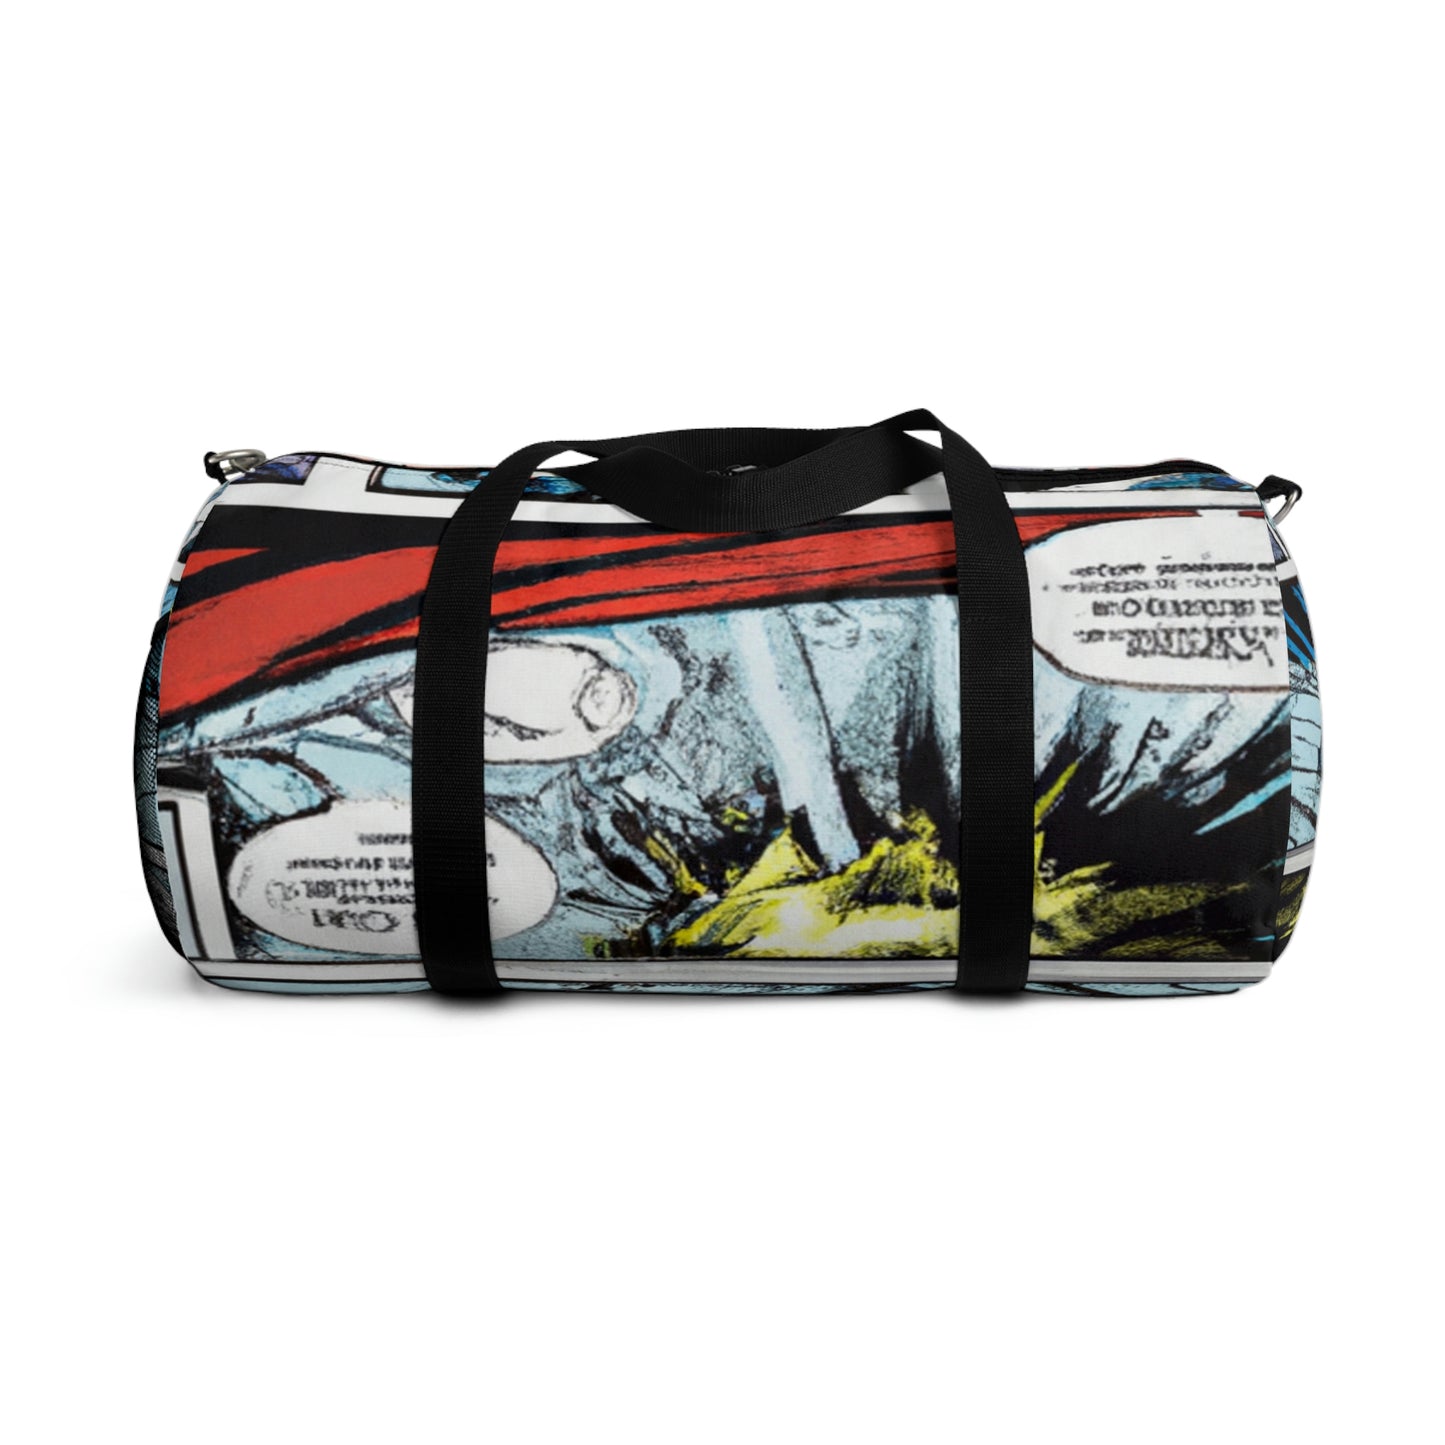 Hector Delacroix - Comic Book Duffel Bag